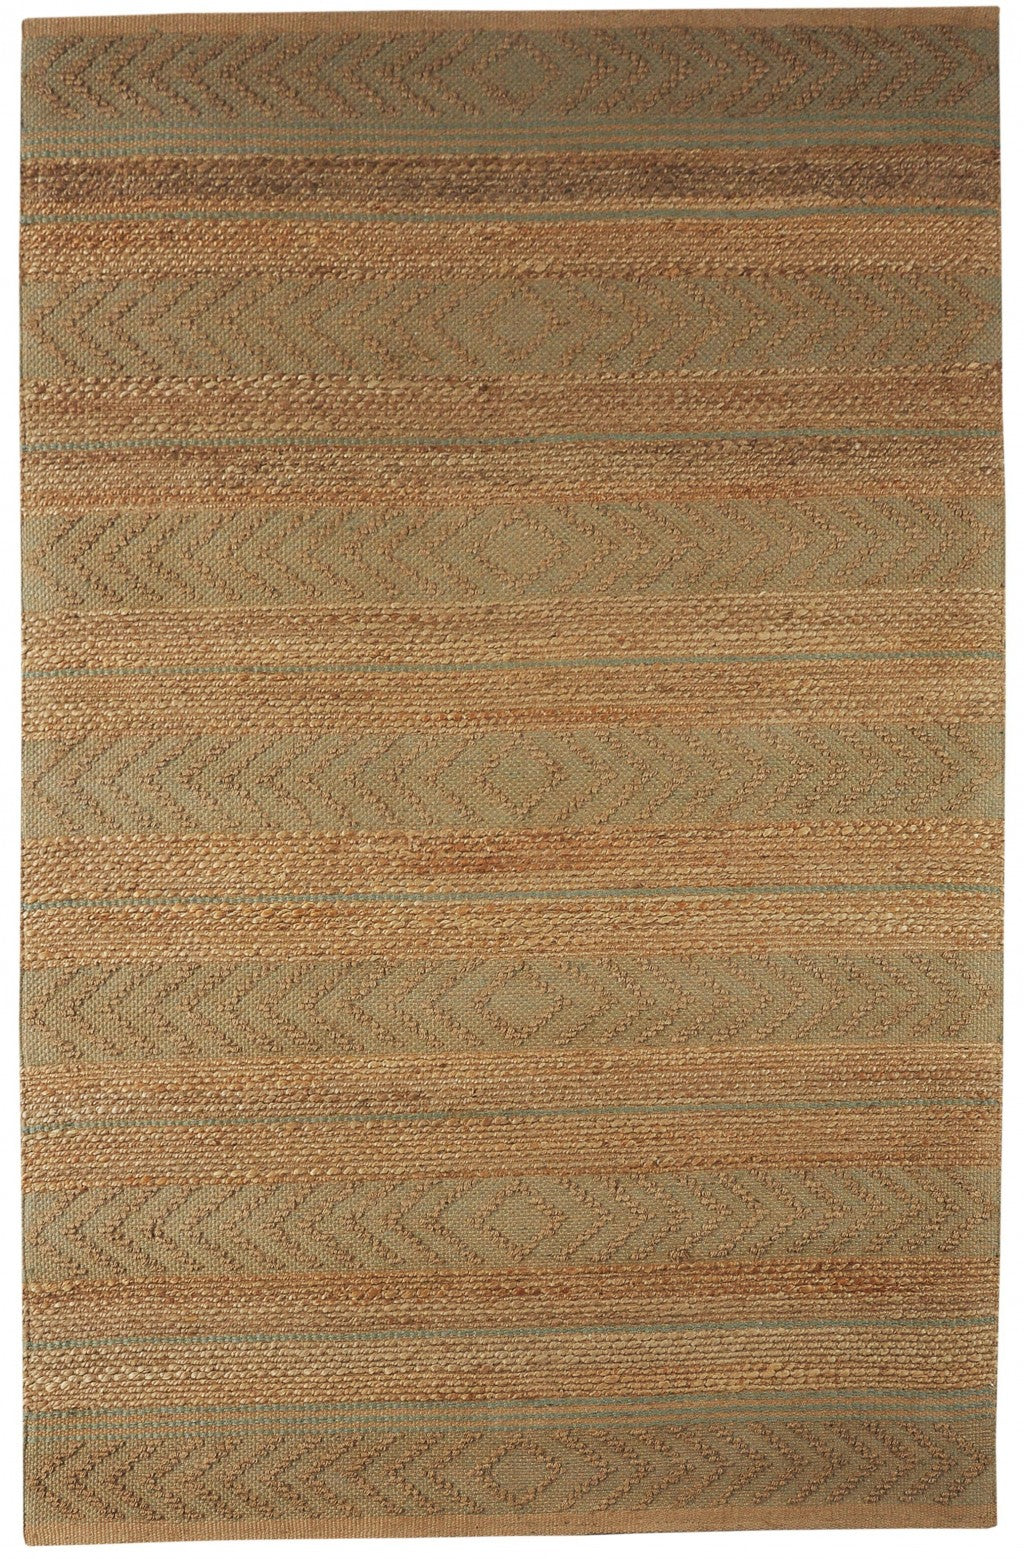 5’ x 8’ Seafoam and Tan Bohemian Striped Area Rug